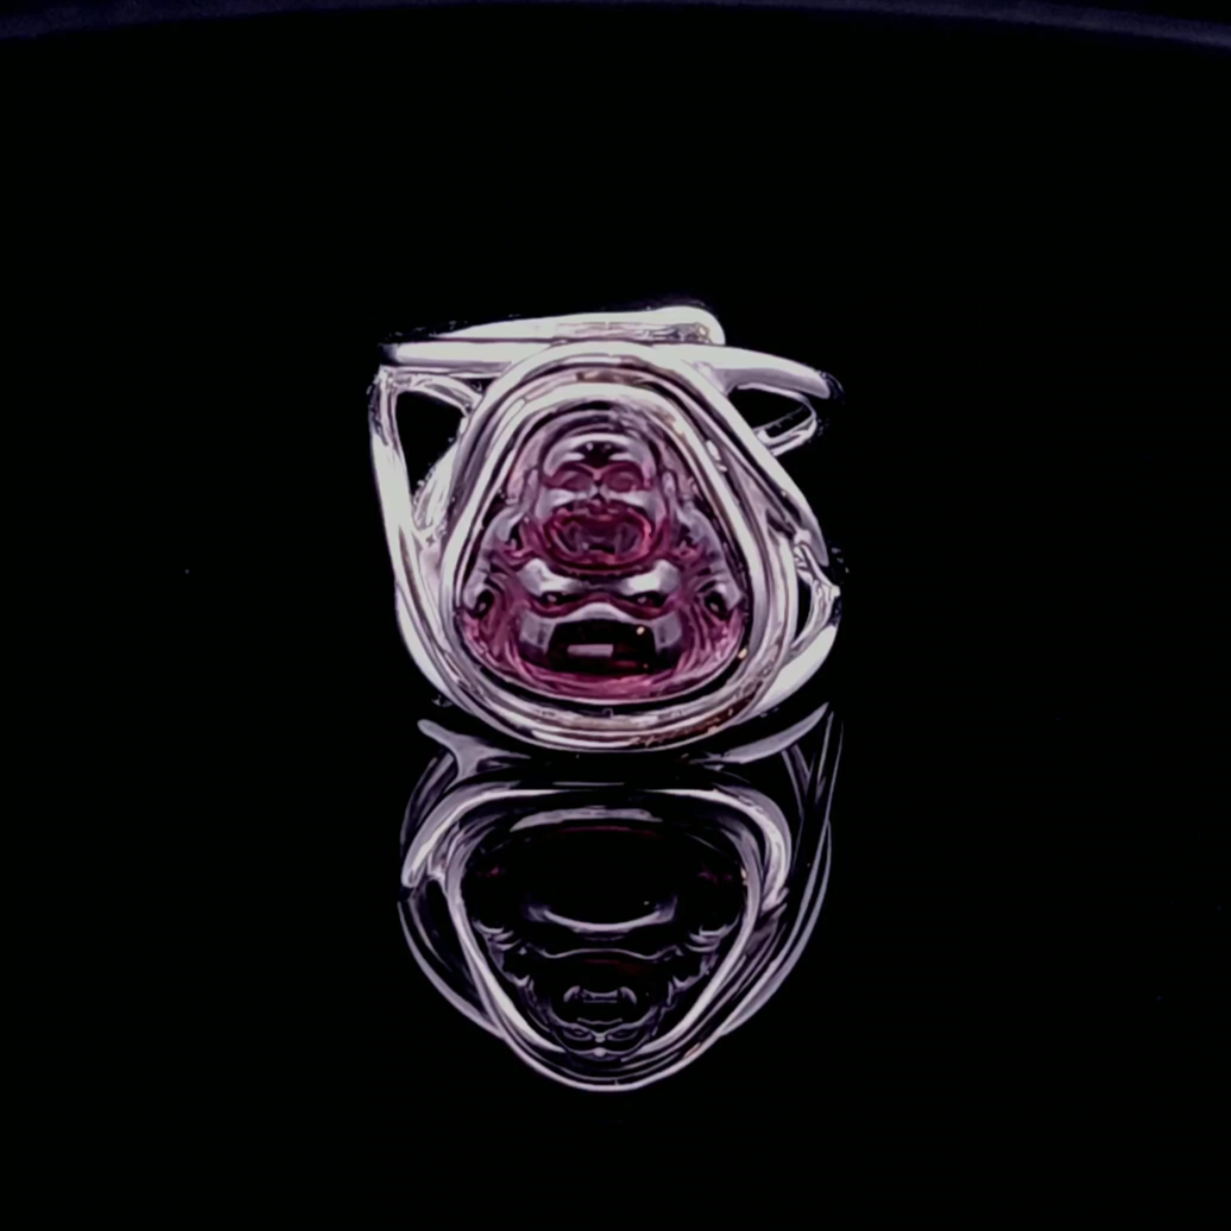 Rhodolite Garnet Buddha Adjustable Finger Cuff Ring .925 Silver for Expressing Love, Joy and Harmony